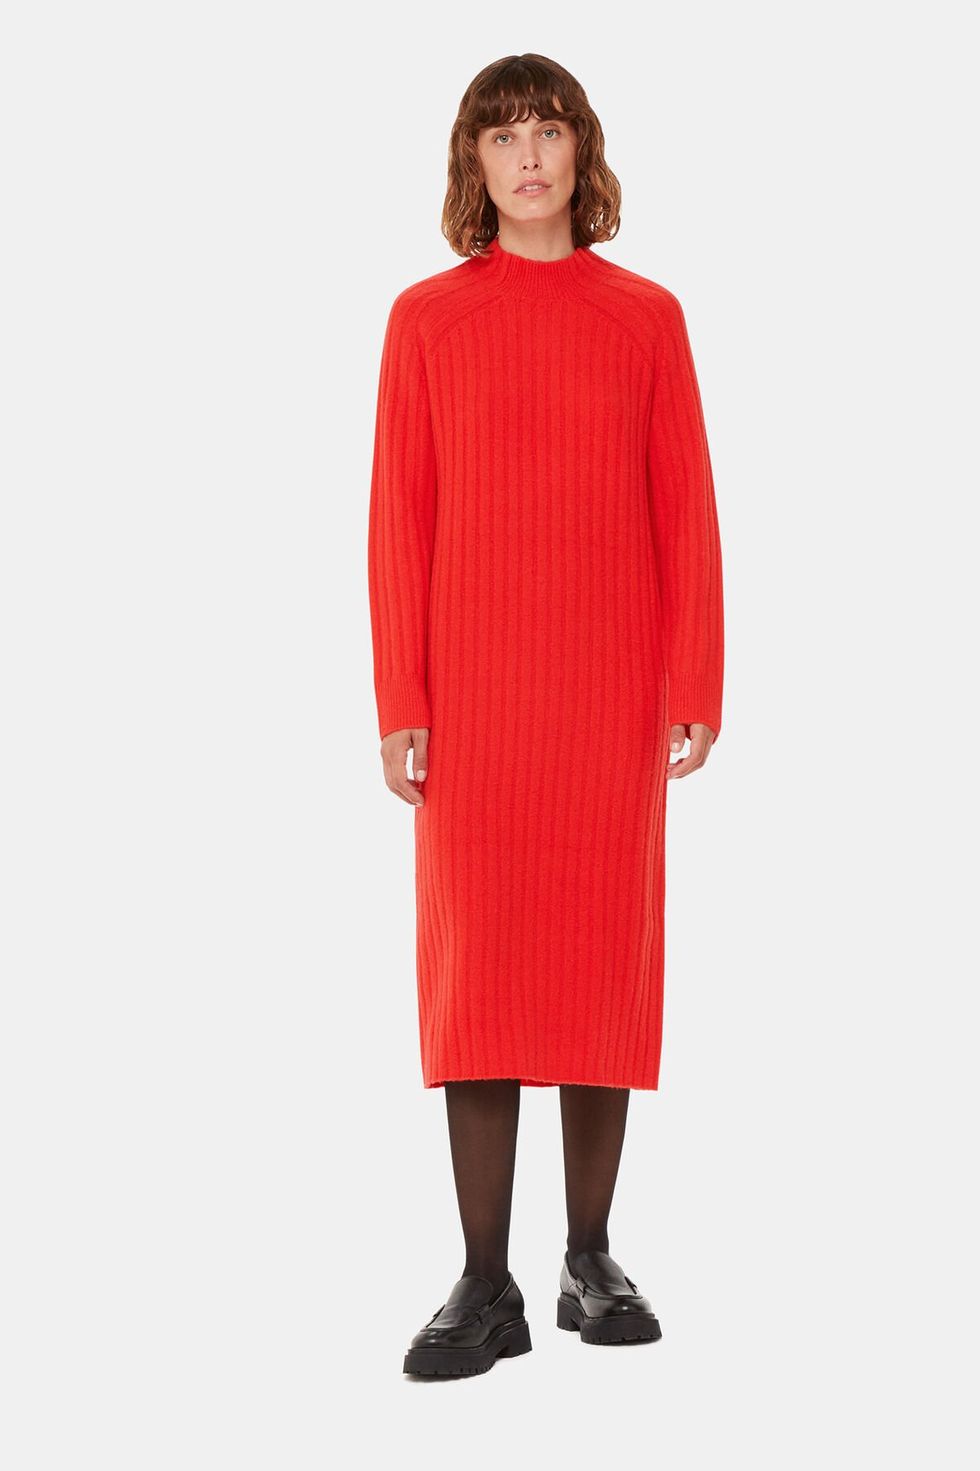 Best jumper dress: The 11 best jumper dress styles to shop now